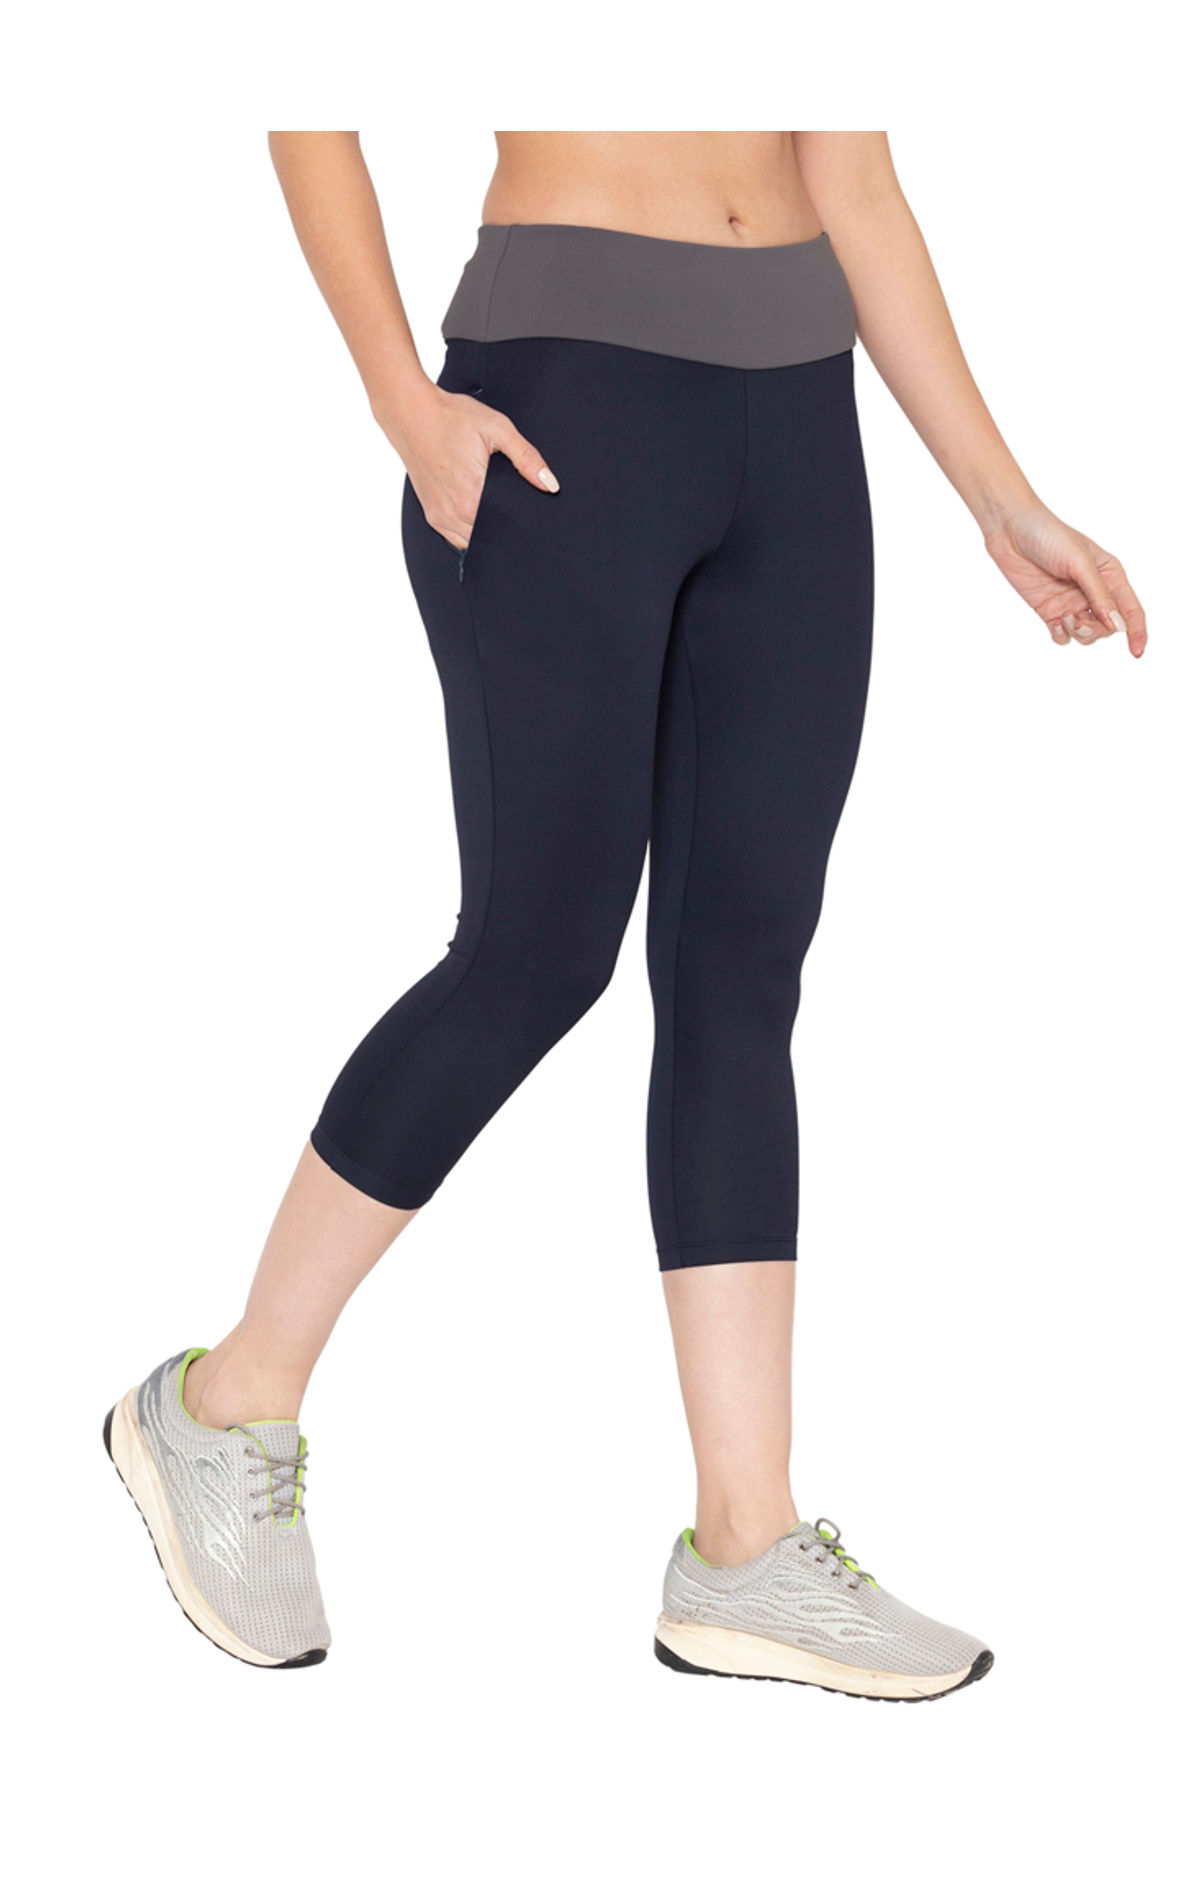 DEAR SPARKLE High Waist Workout Capri Leggings with 3 Pockets for Women.  Yoga Athletic Capris for Women (S2)